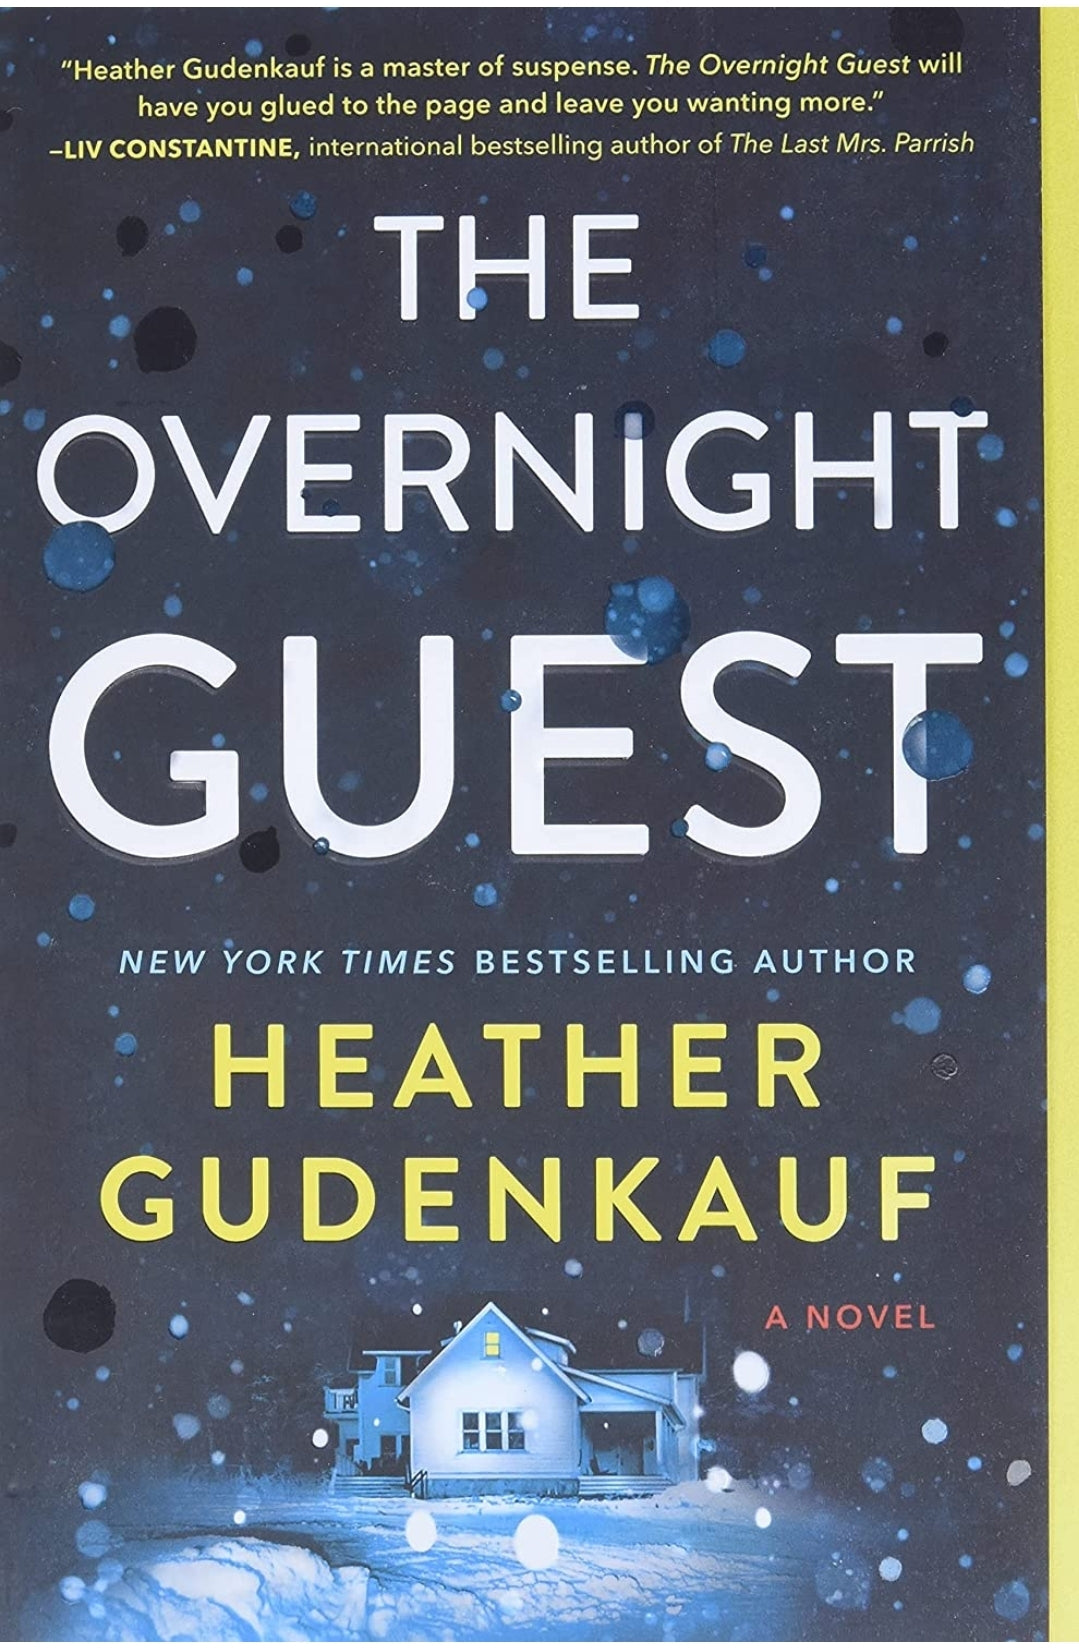 The Overnight Guest: A Novel